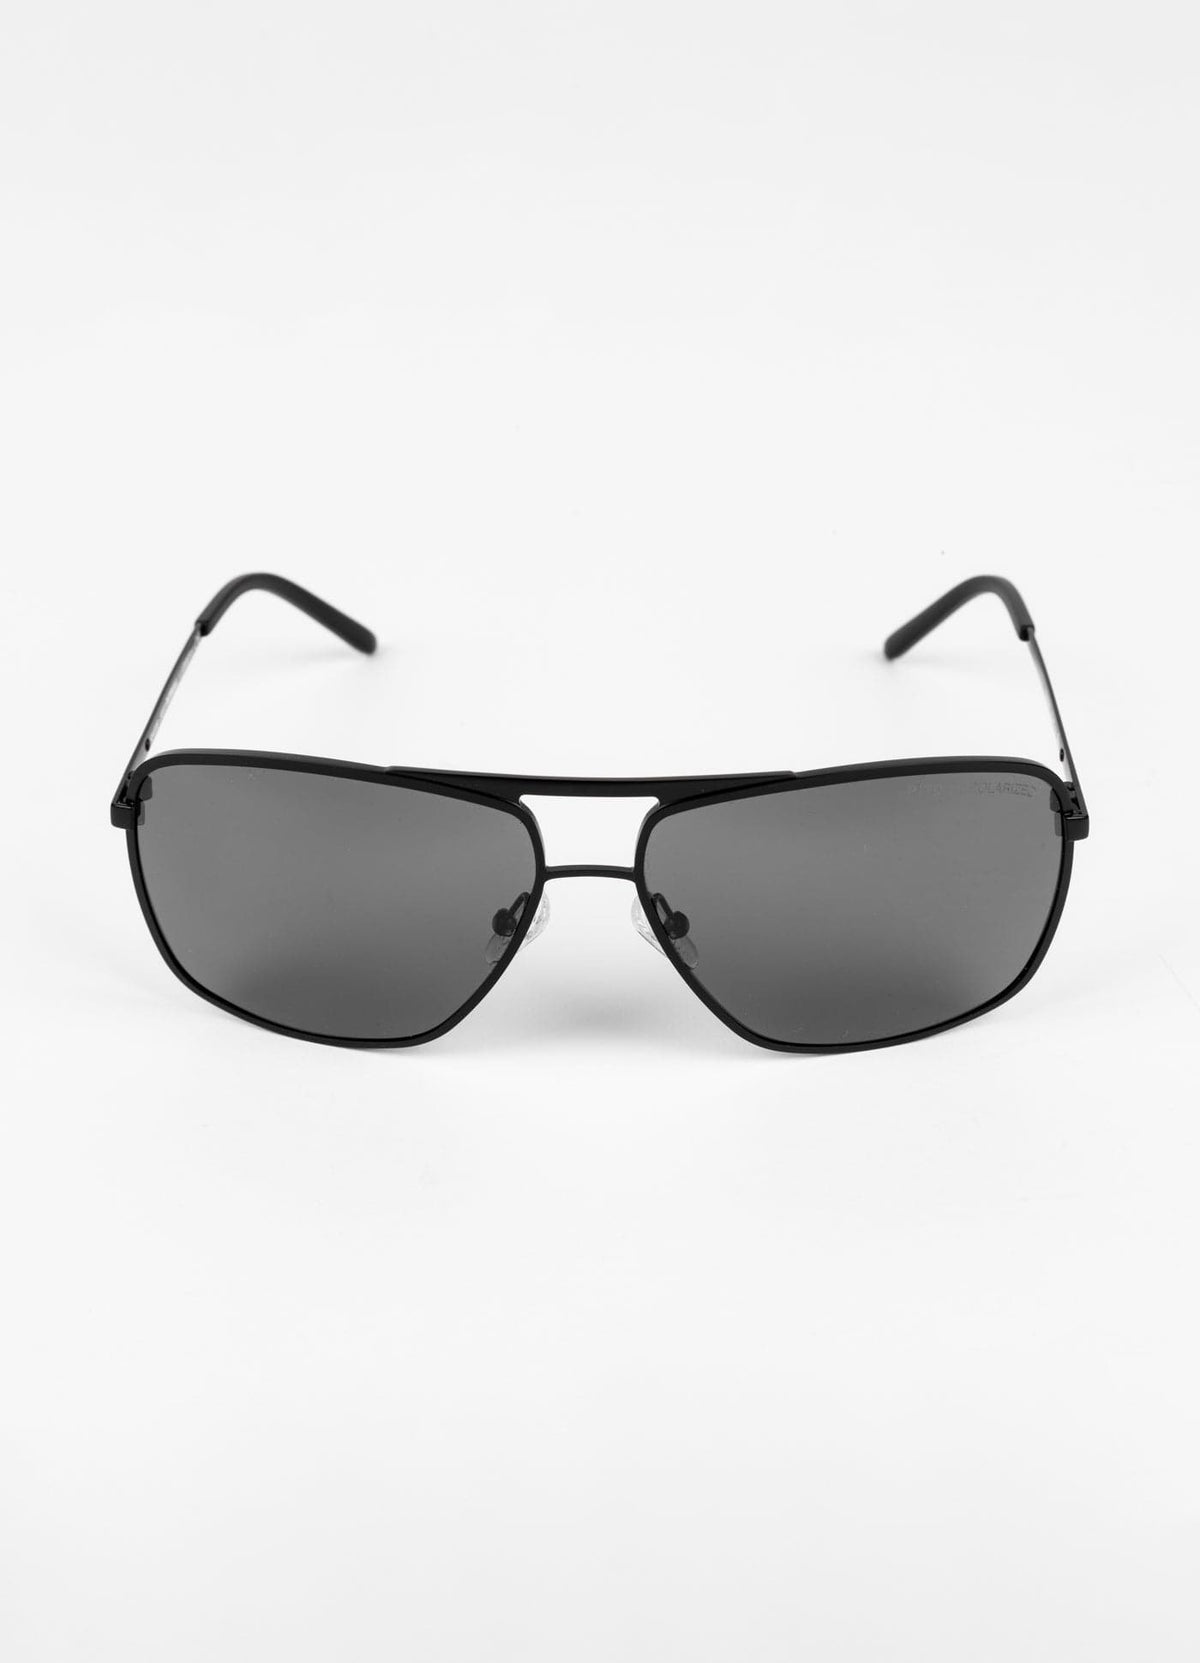 LARMIER 2 Black Sunglasses - Pitbullstore.eu